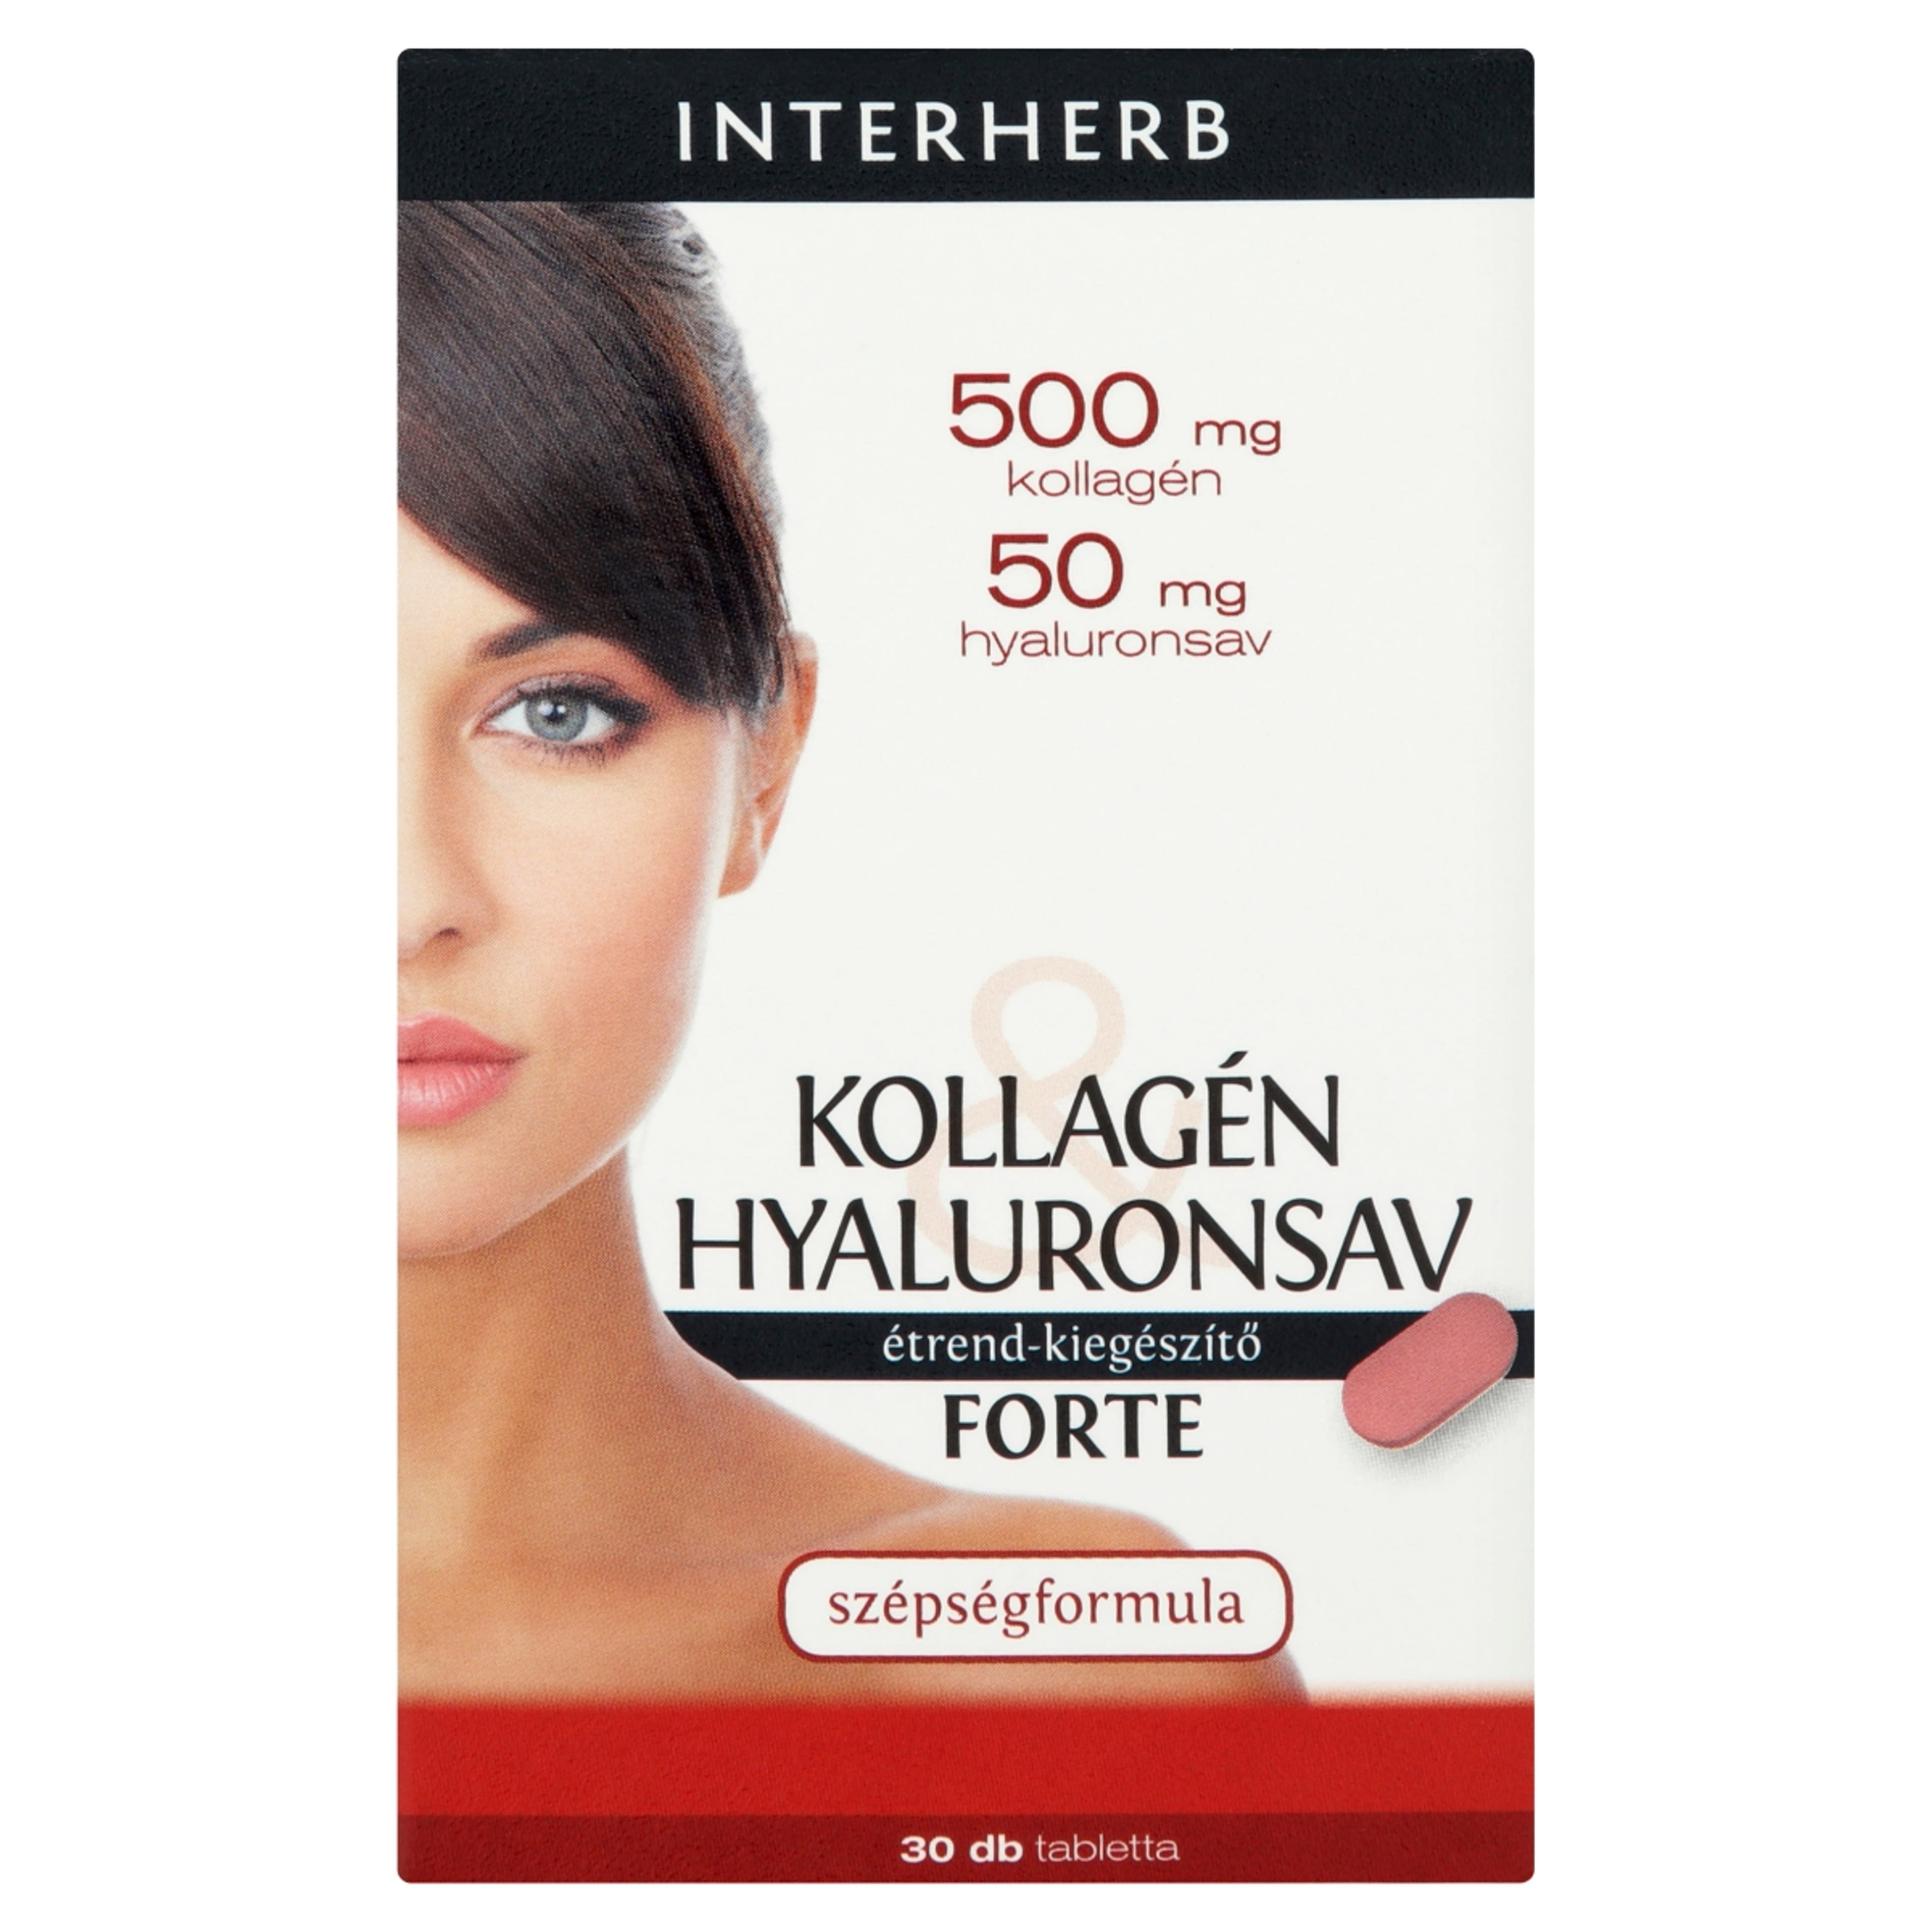 Interherb Kollagén És Hyaluronsav Forte Tabletta - 30 db-1